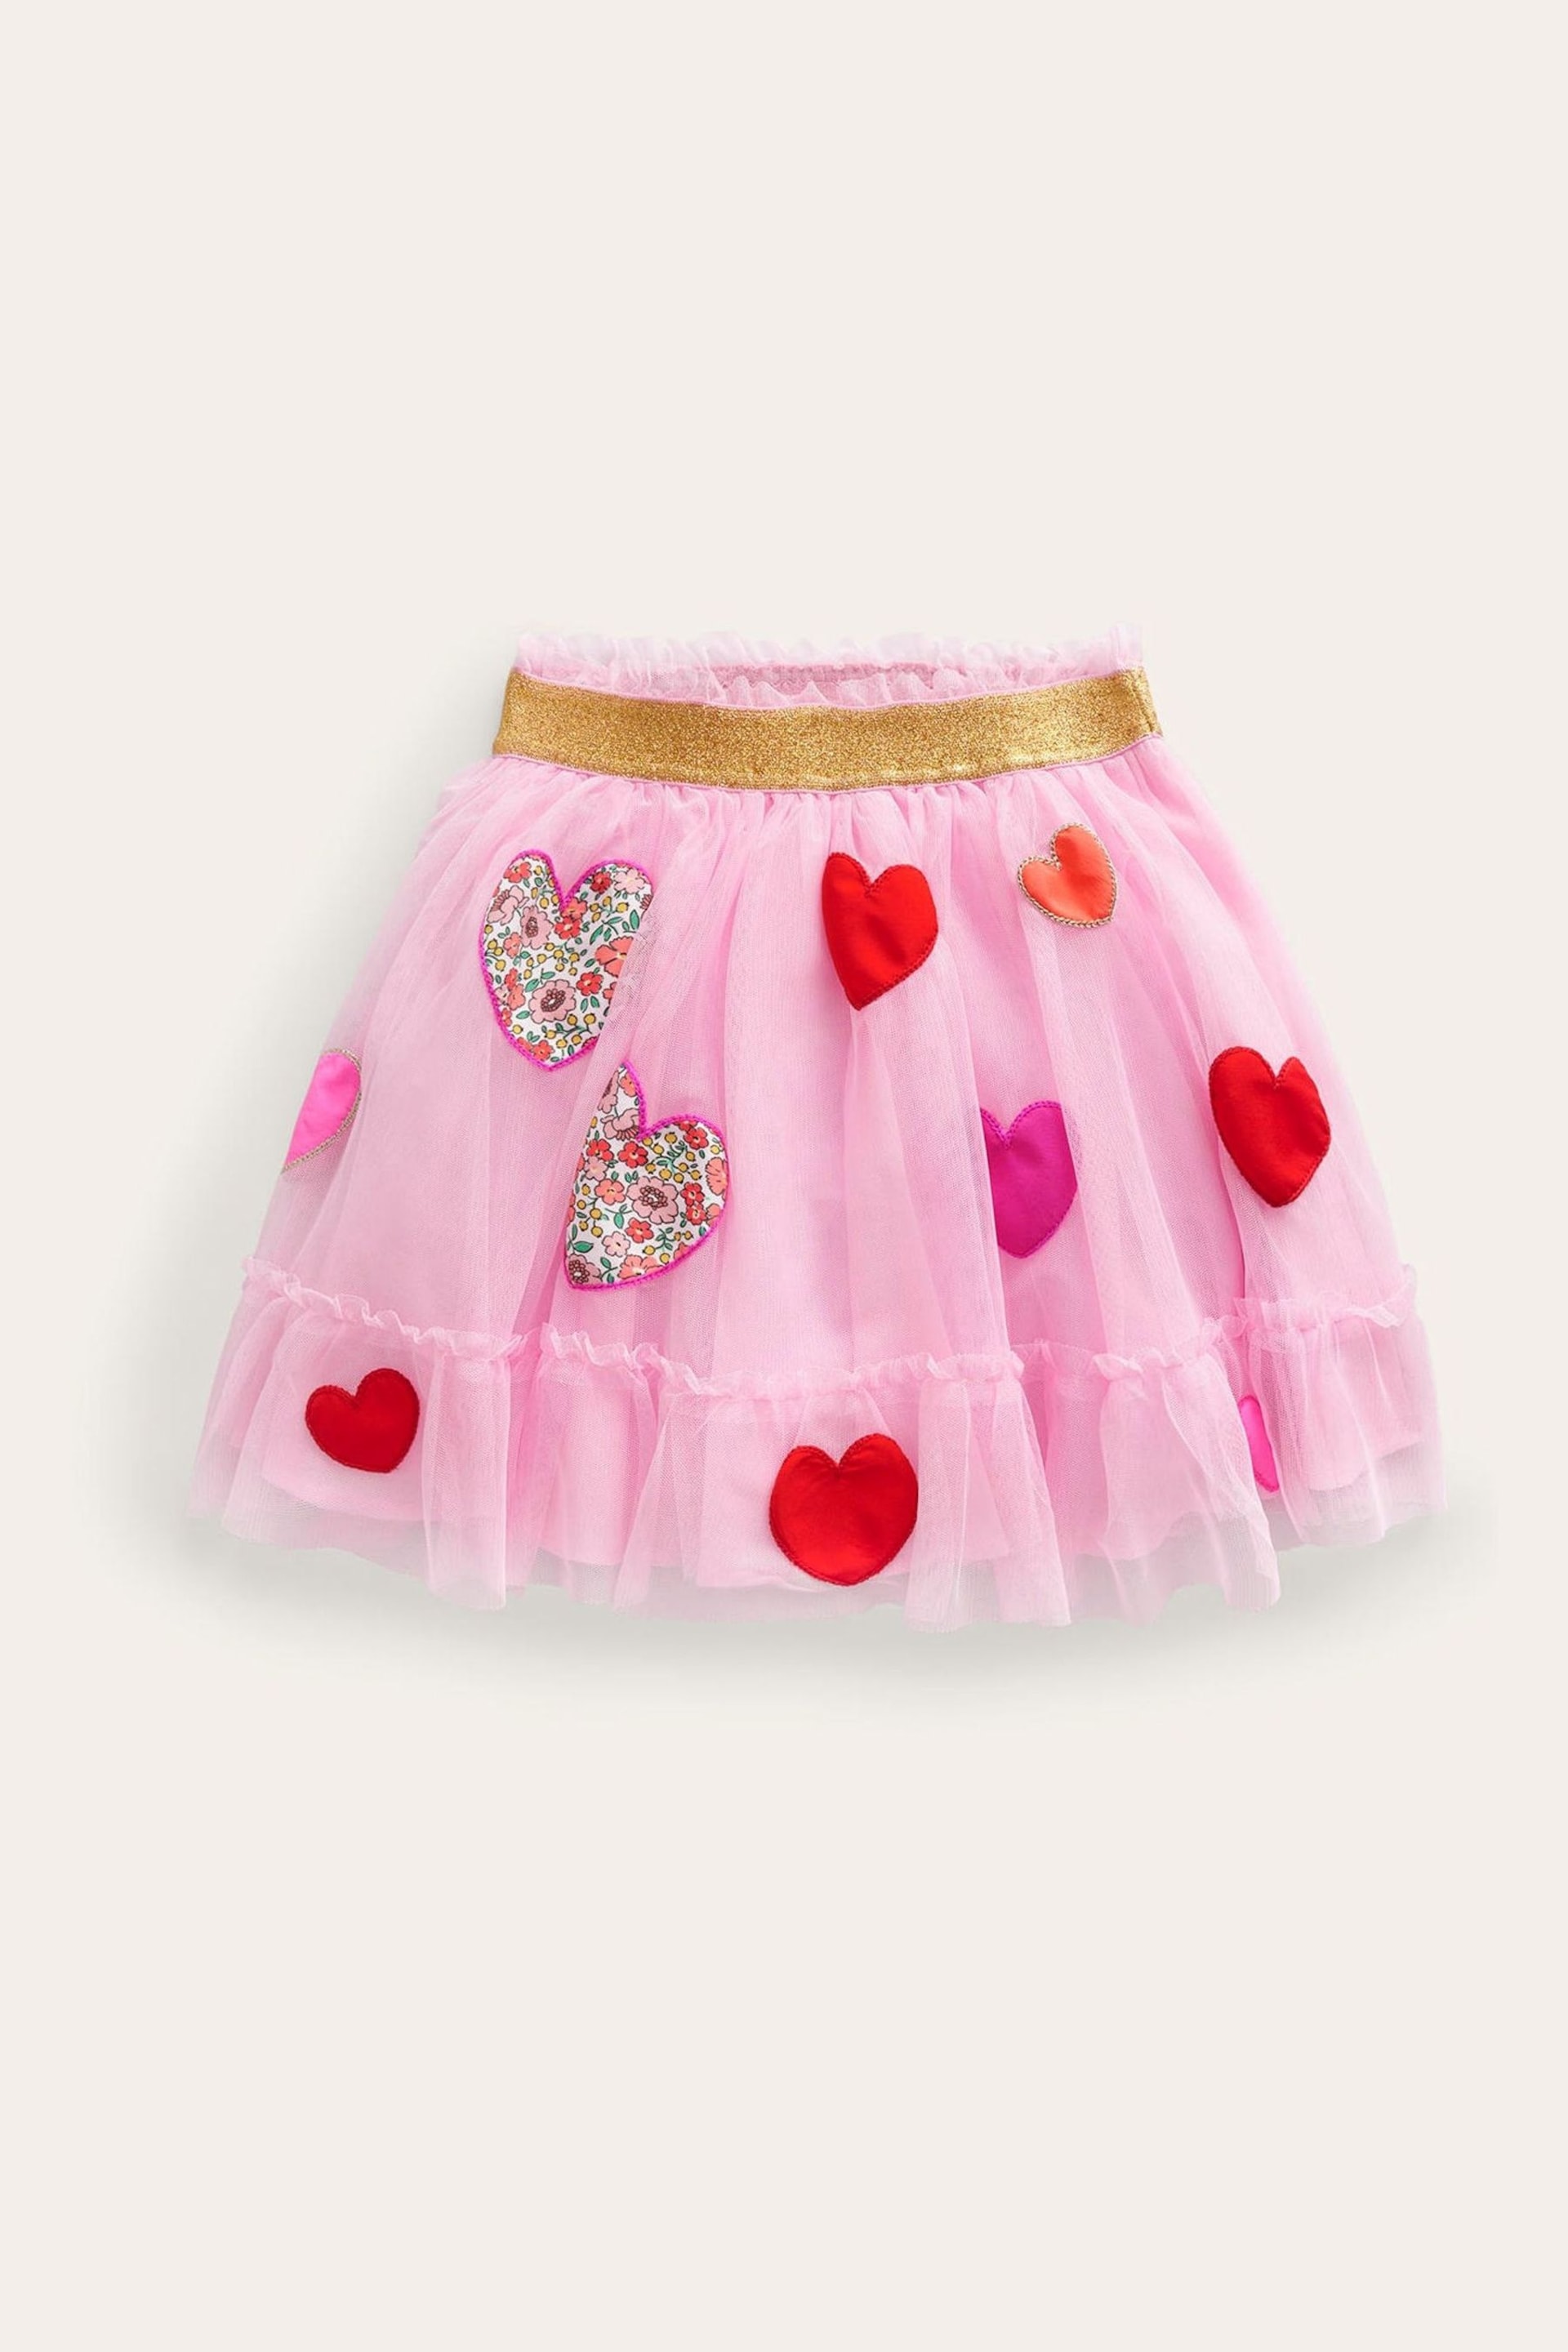 Boden Red Heart Tulle Appliqué Skirt - Image 3 of 4